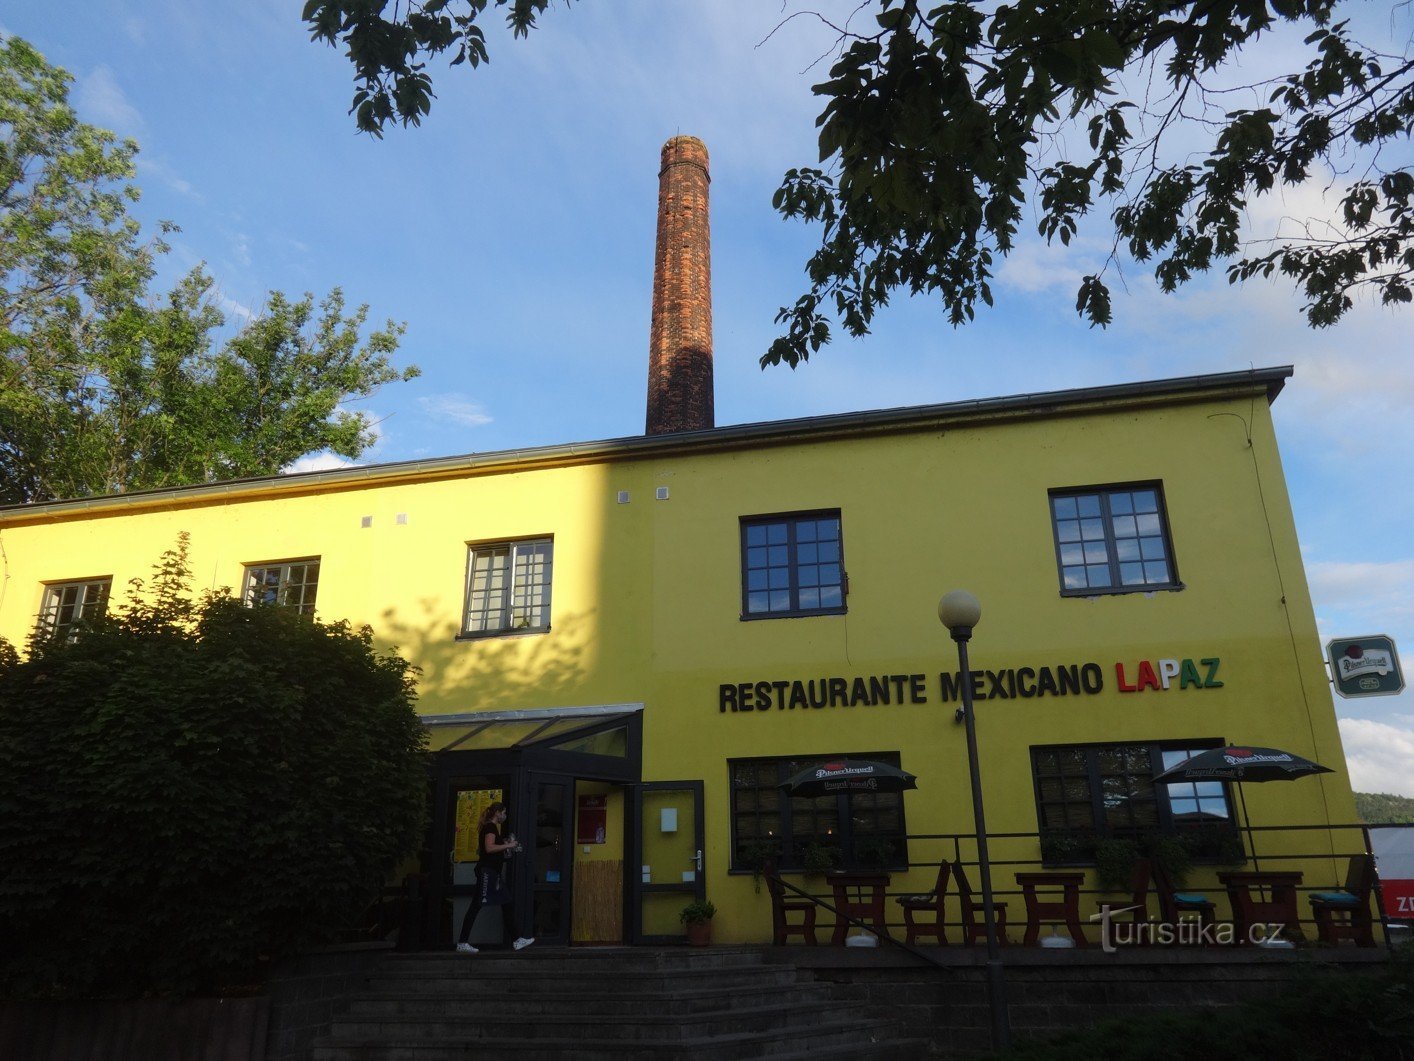 Mexicaans restaurant LaPaz in Beroun